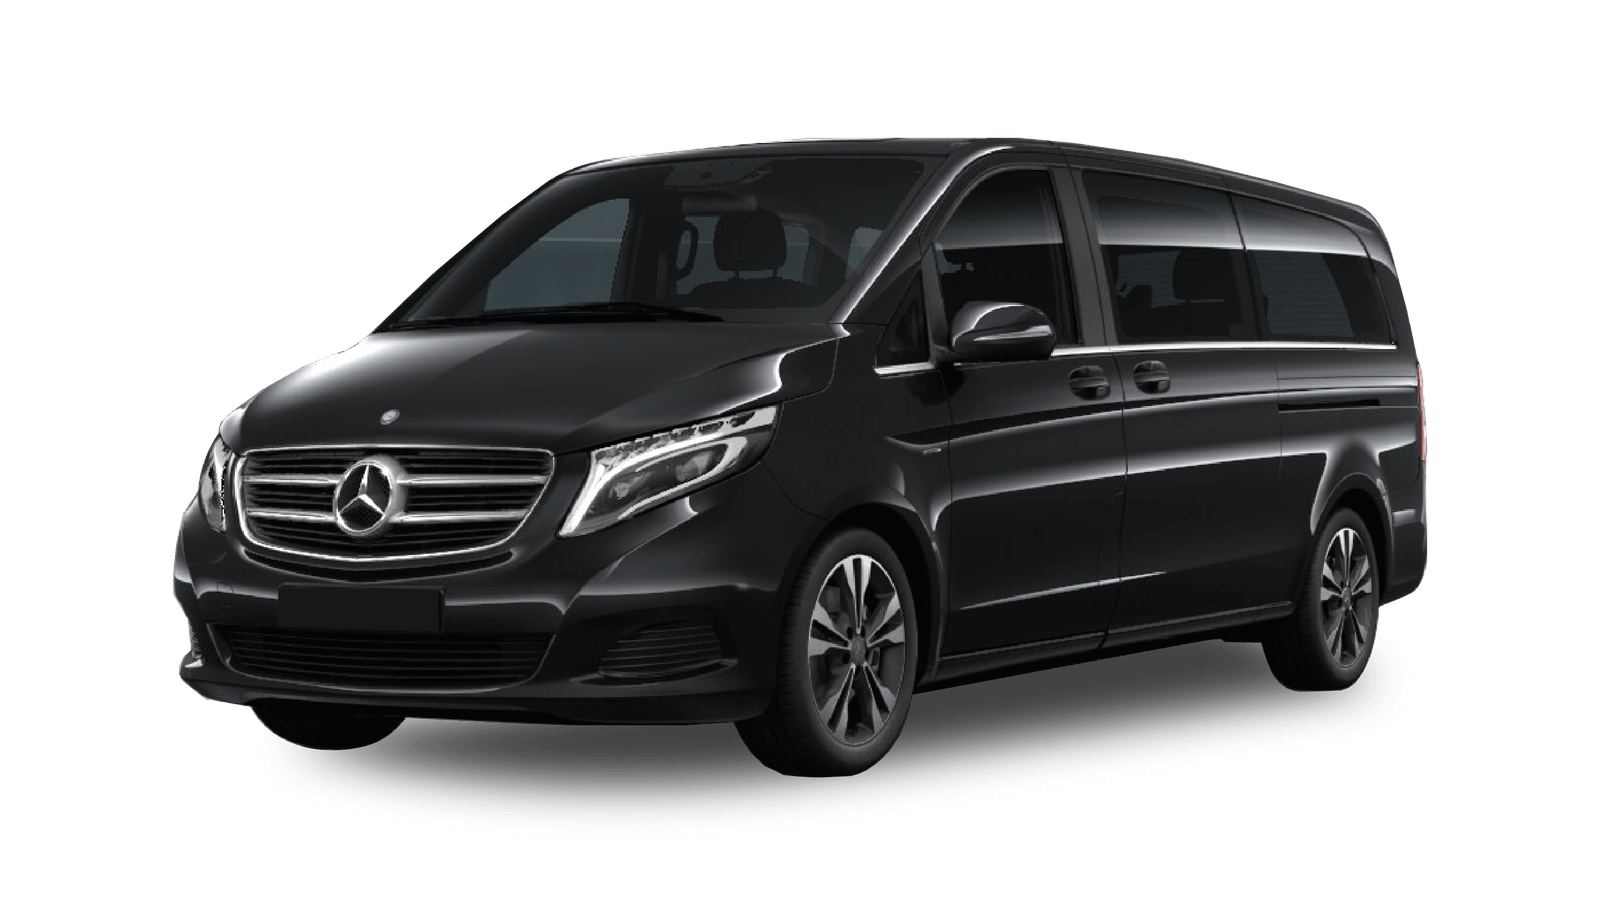 Vip Transfer Service via Mercedes Vito Rental with Driver